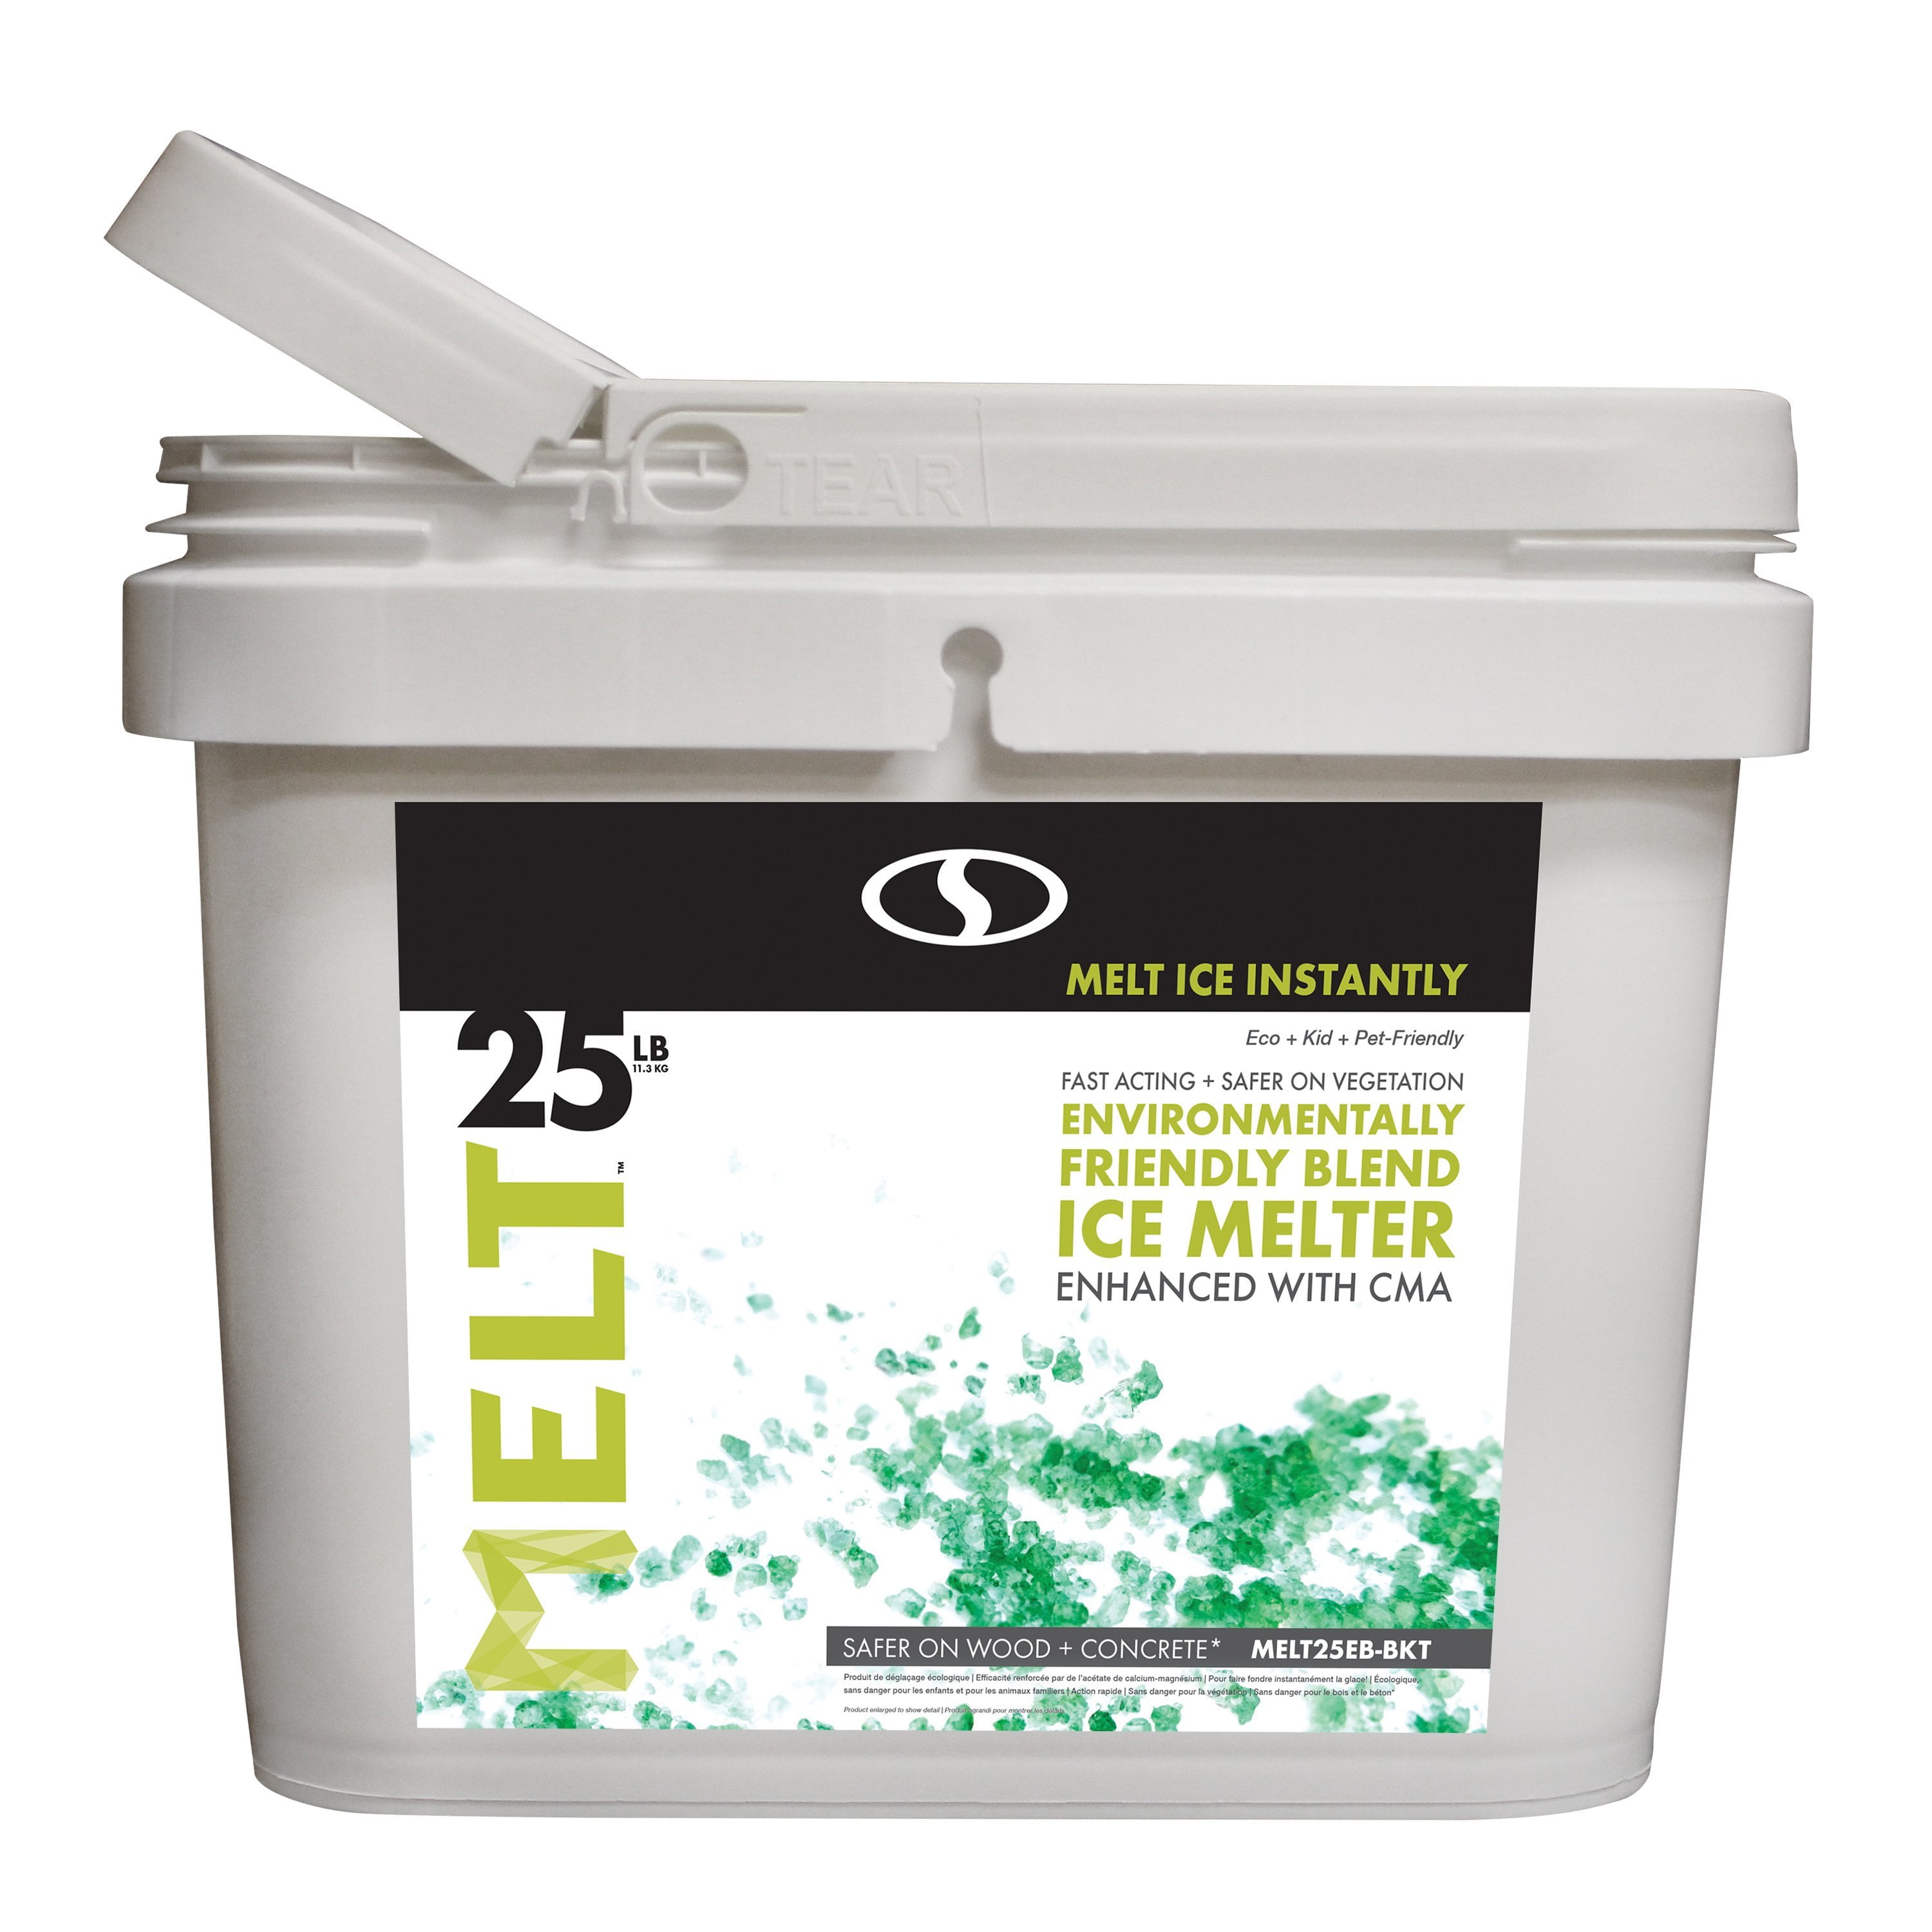 Morton Action Melt Fast Action Ice Melt Salt 12 lb jug, Water Filtration &  Treatment